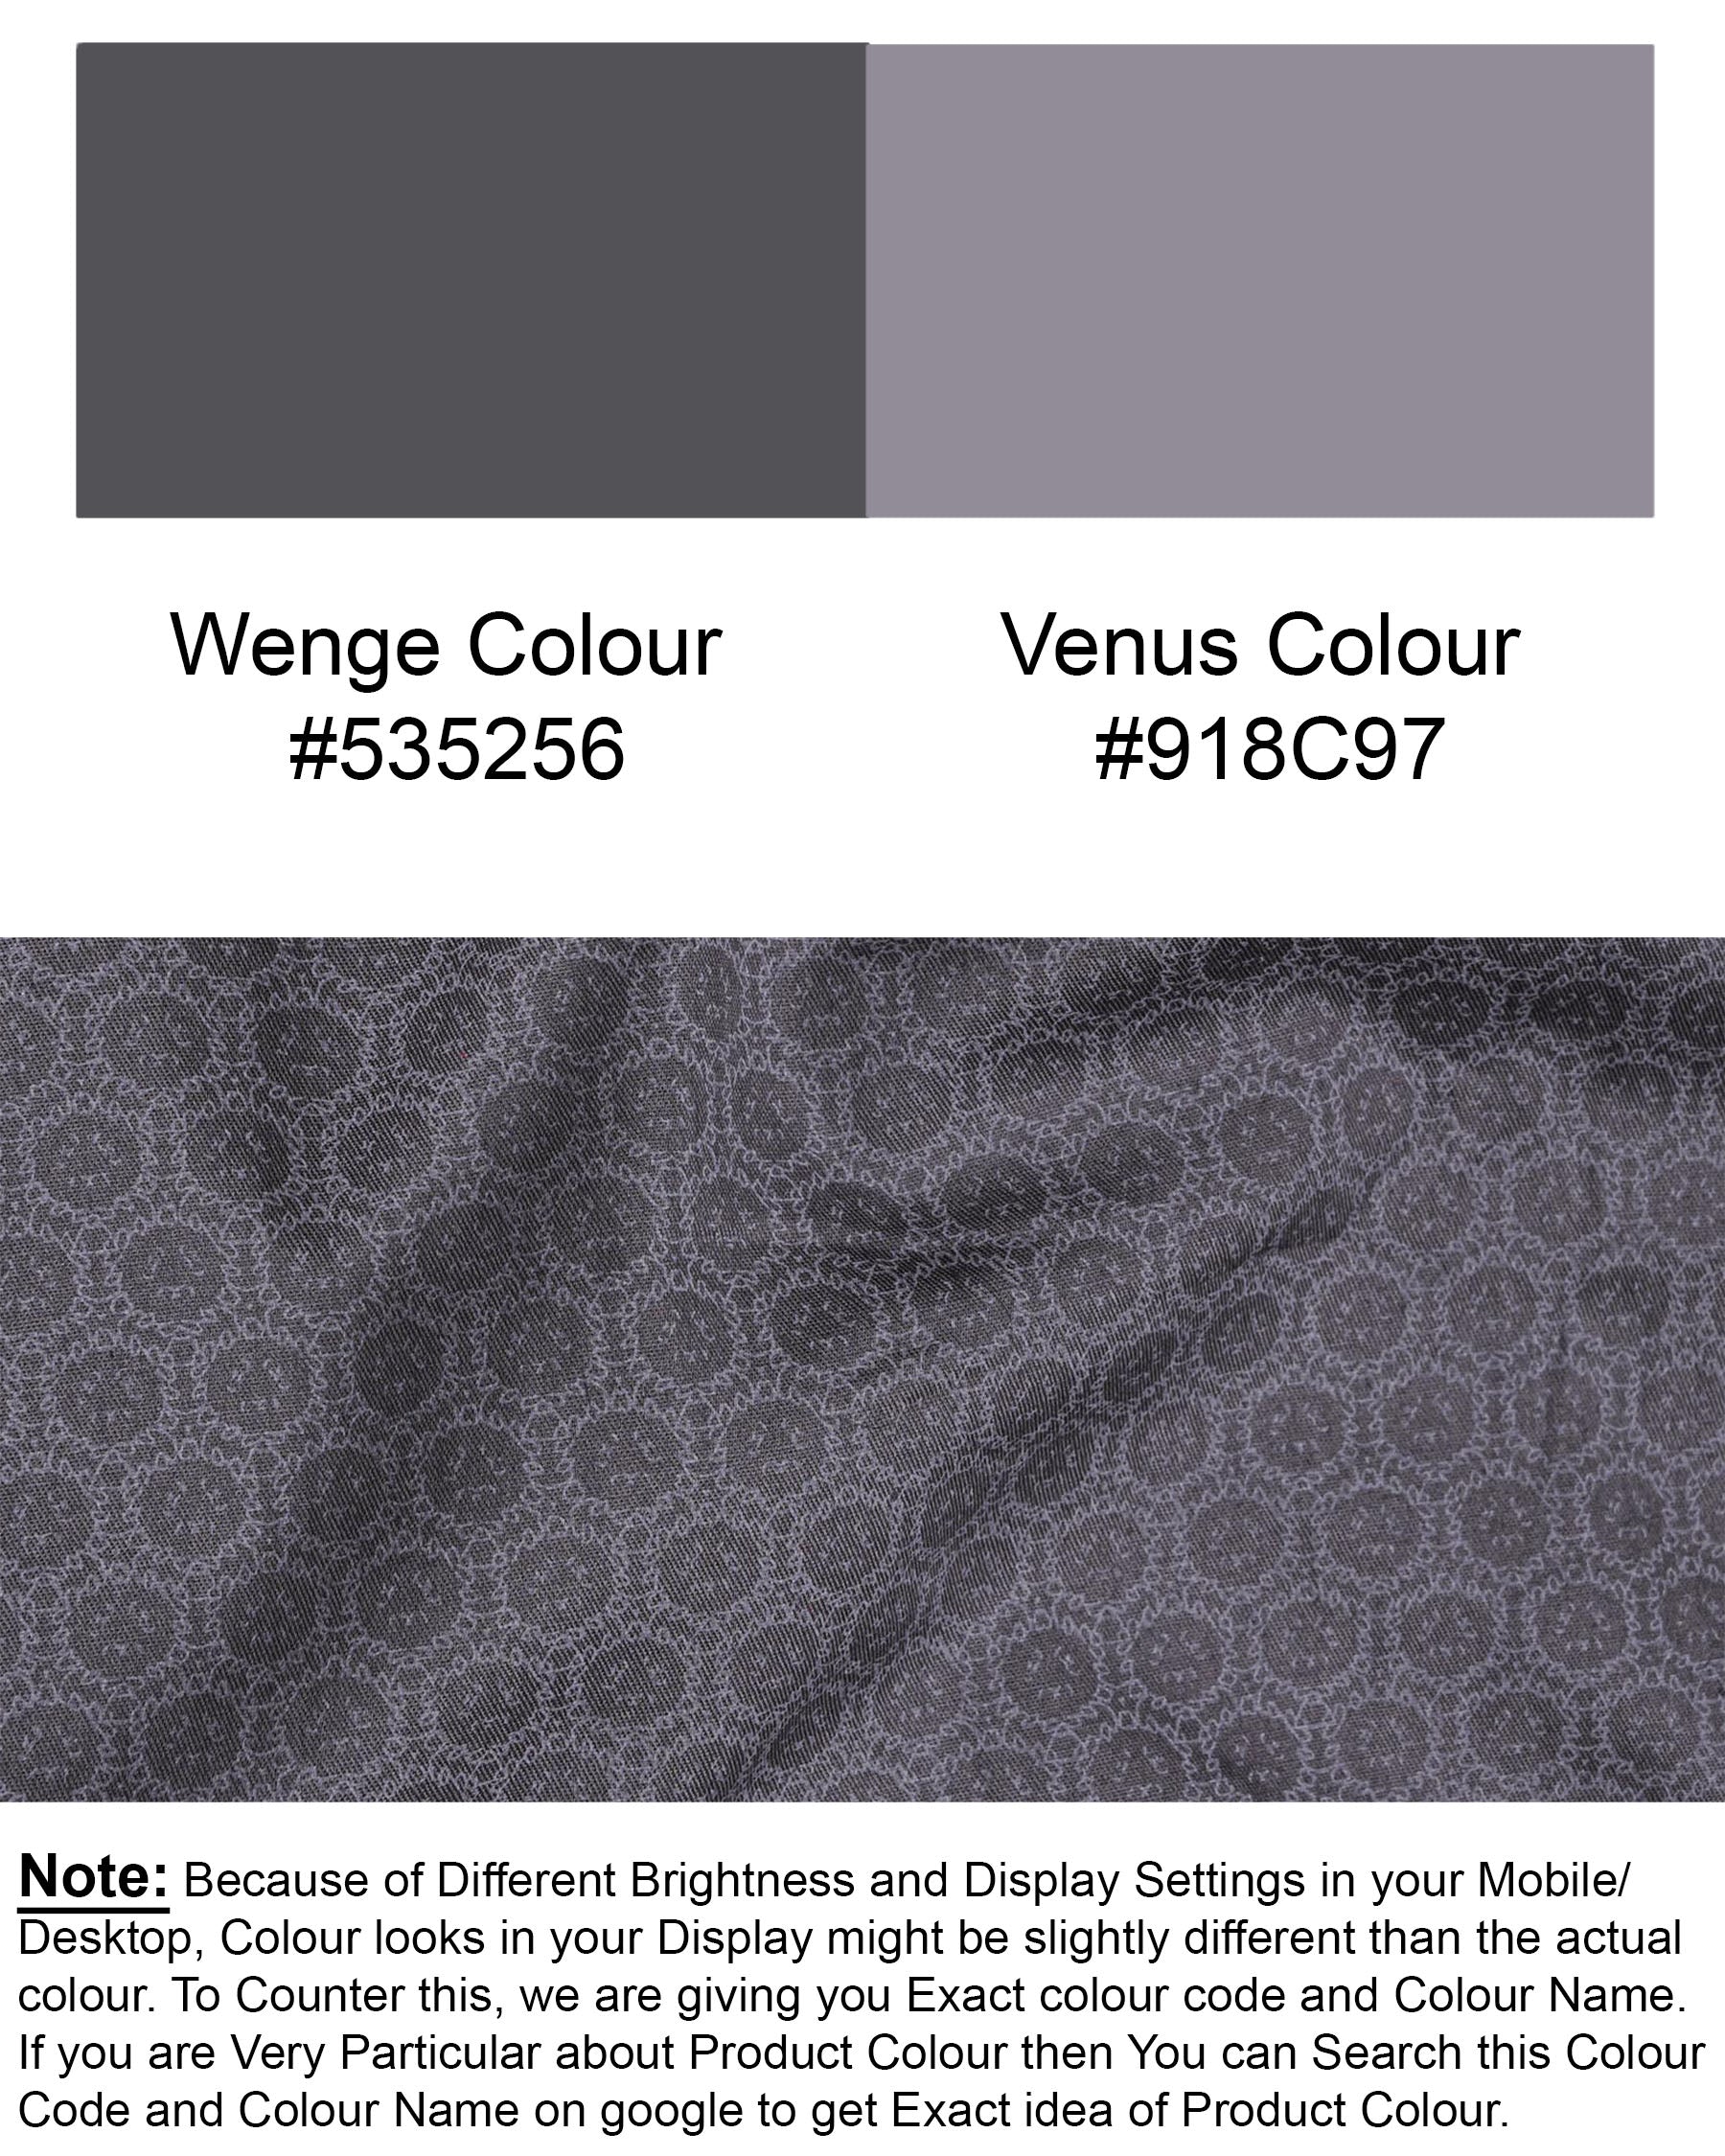 Wenge and Venus Grey Printed Super Soft Premium Cotton Shirt 7554-BD-BLK-38,7554-BD-BLK-38,7554-BD-BLK-39,7554-BD-BLK-39,7554-BD-BLK-40,7554-BD-BLK-40,7554-BD-BLK-42,7554-BD-BLK-42,7554-BD-BLK-44,7554-BD-BLK-44,7554-BD-BLK-46,7554-BD-BLK-46,7554-BD-BLK-48,7554-BD-BLK-48,7554-BD-BLK-50,7554-BD-BLK-50,7554-BD-BLK-52,7554-BD-BLK-52